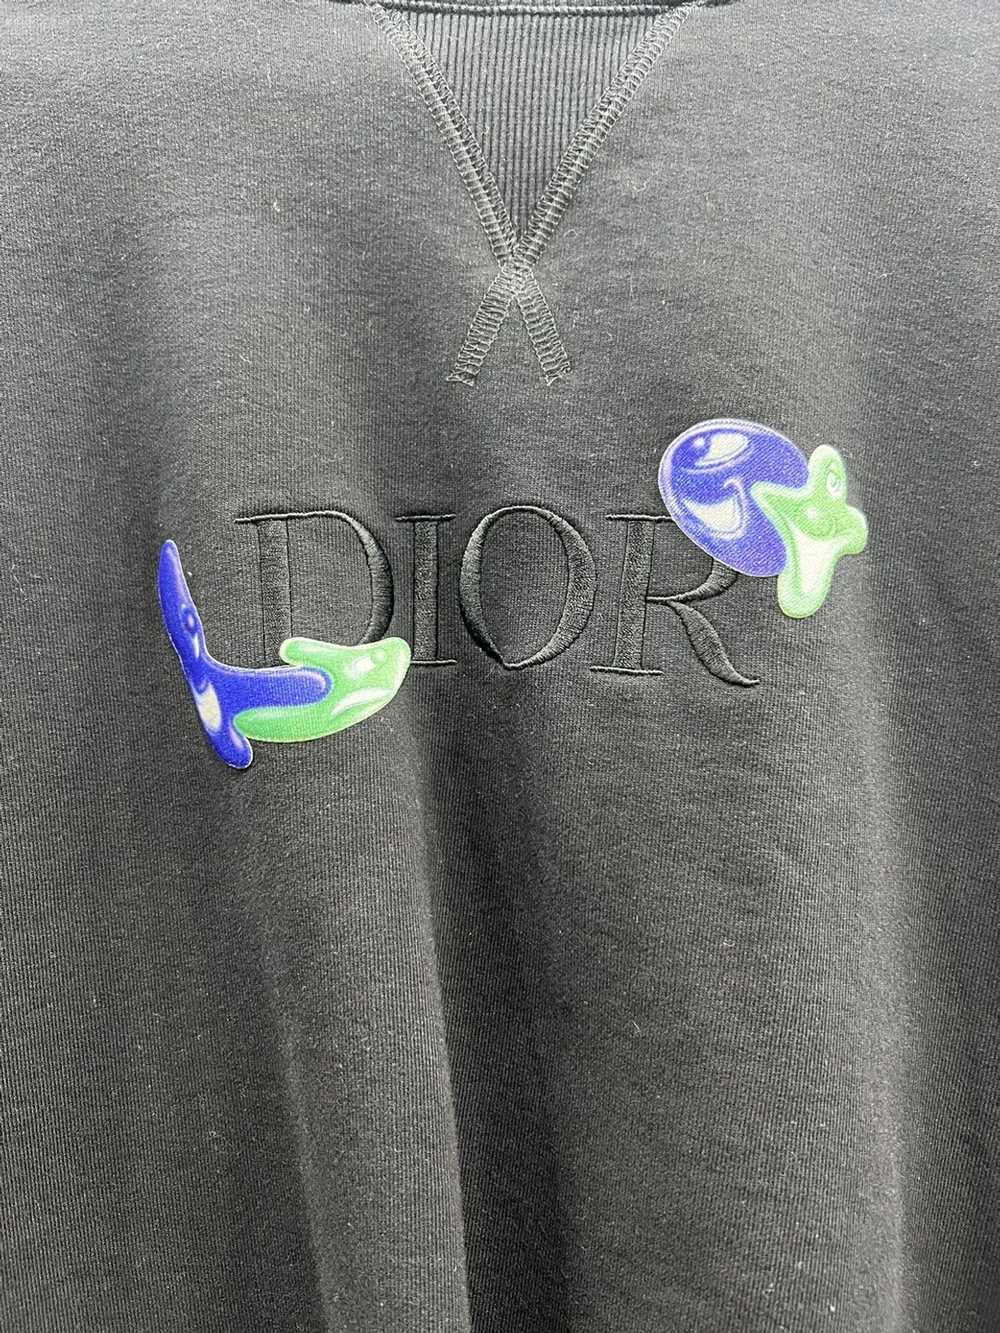 Dior Christian Dior “Kenny Scharf” - image 2